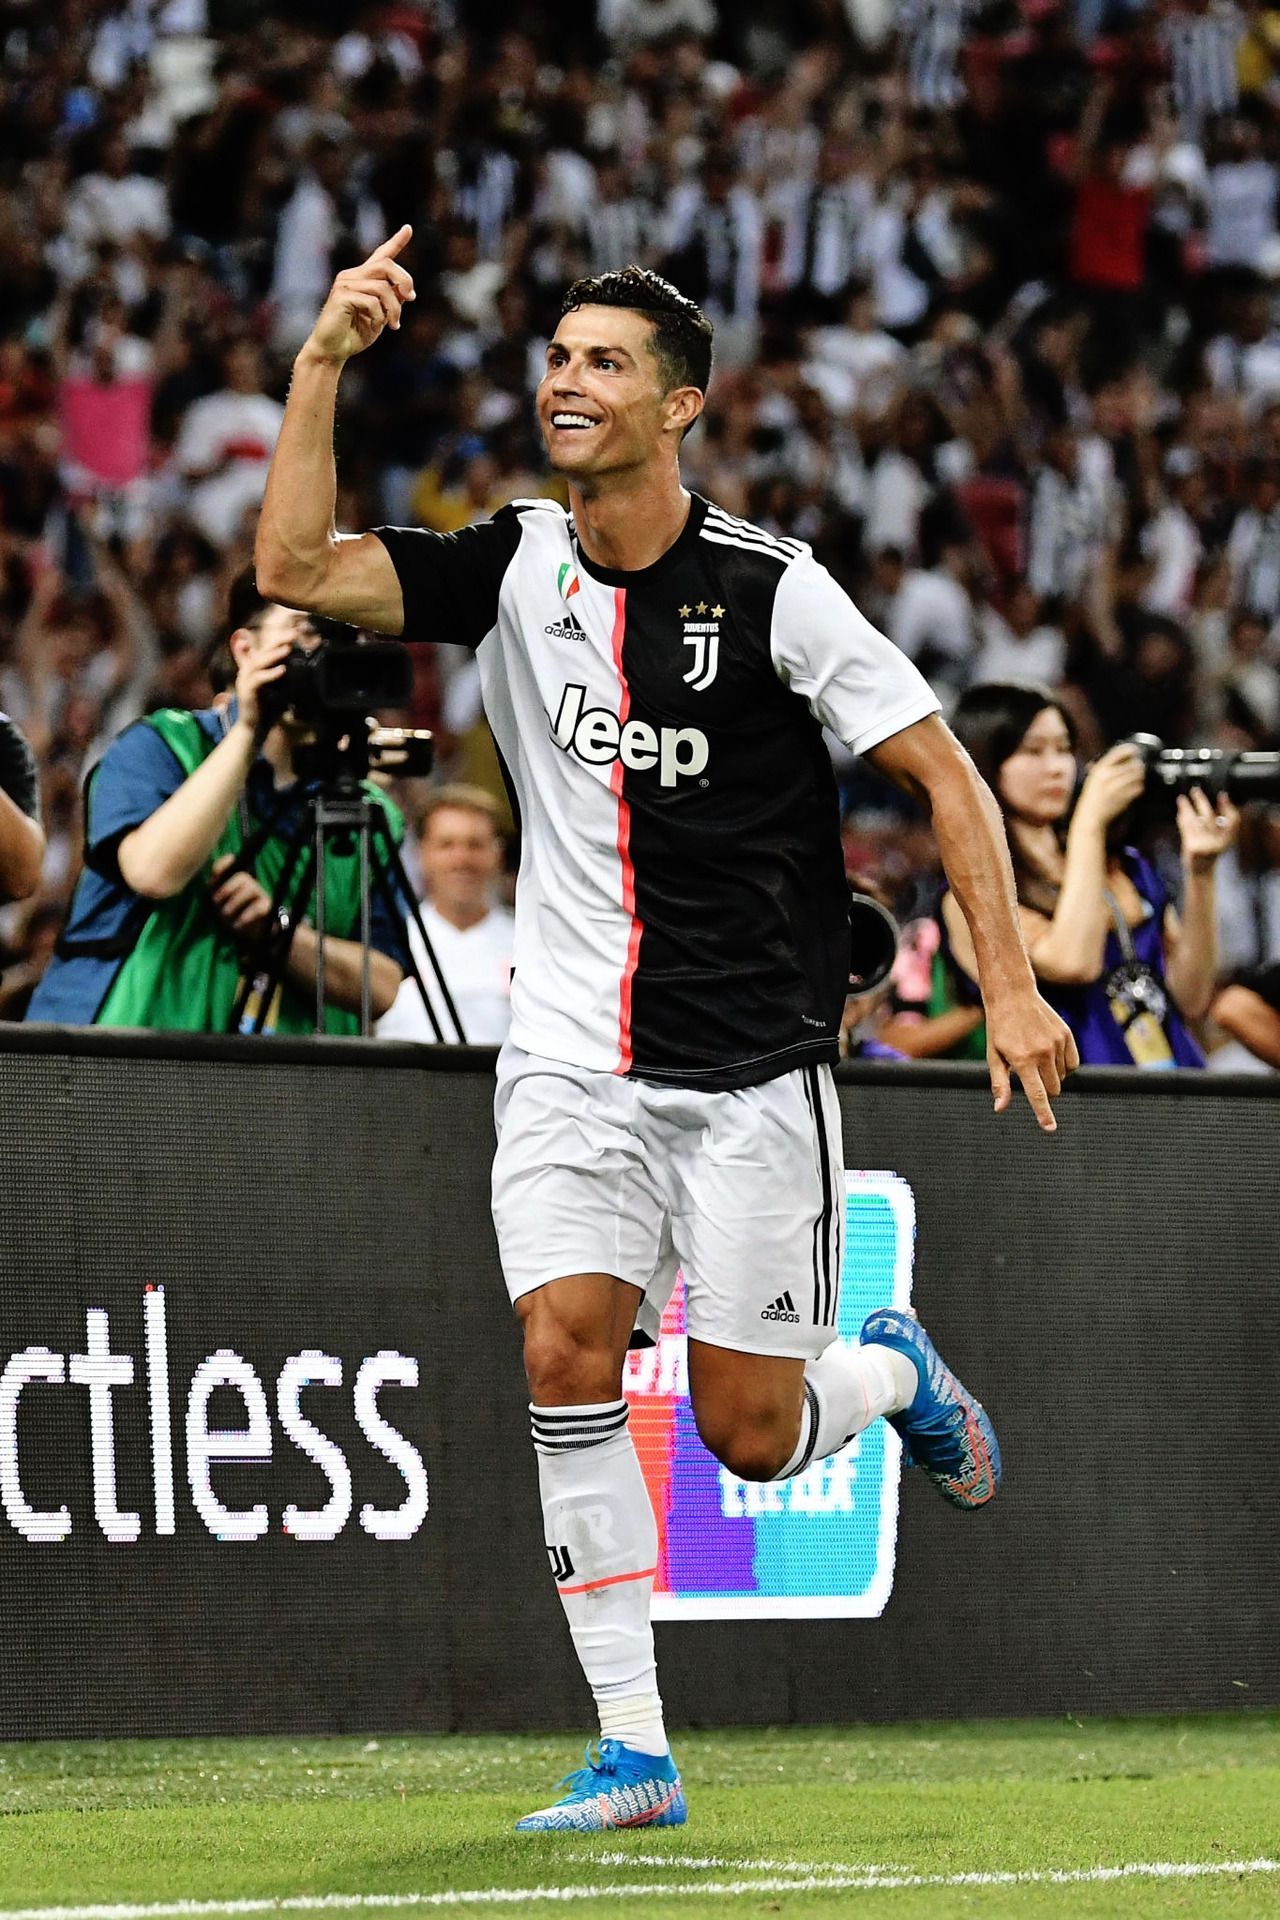  Cristiano Ronaldo Hintergrundbild 1280x1920. Celebrating Victory in Soccer Game